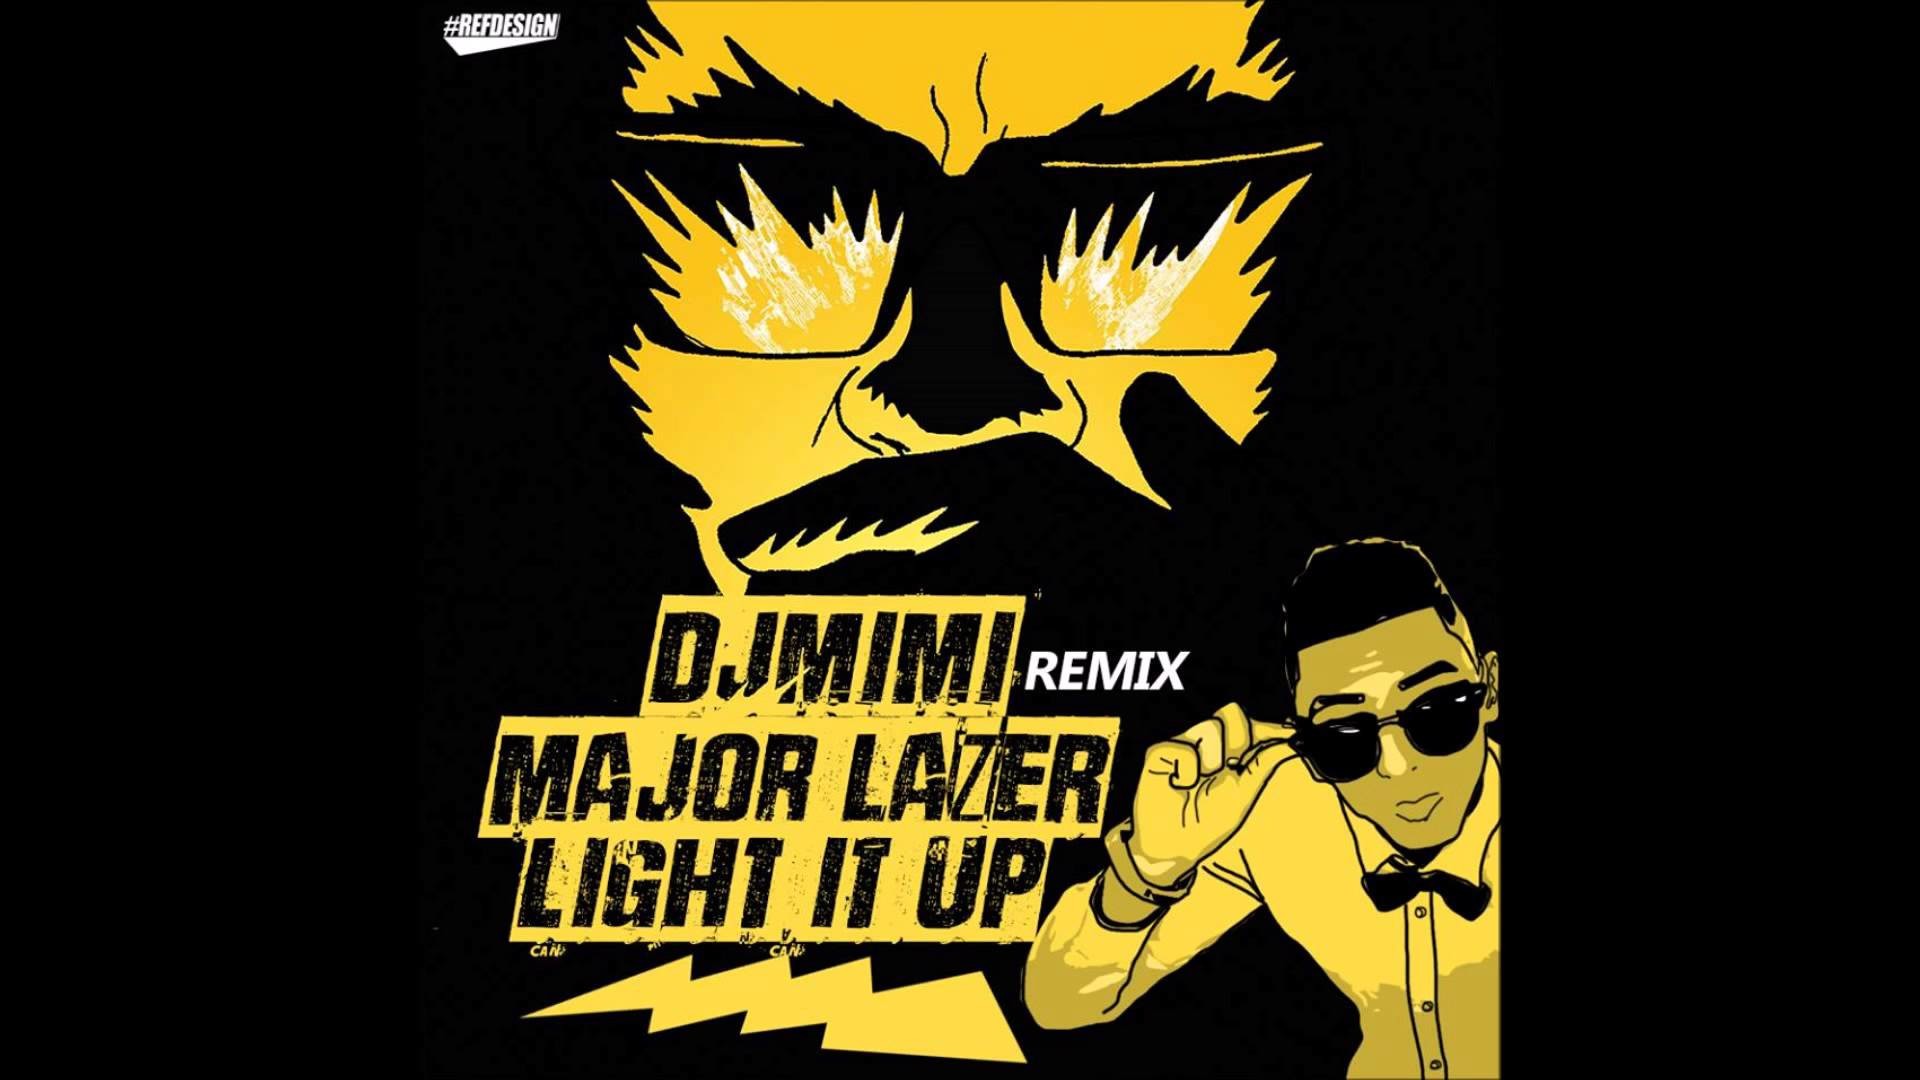 Major lazer remix. Major Lazer. Major Lazer Light it up. Major Lazer – Light it up Remix. Major Laser Light it up.